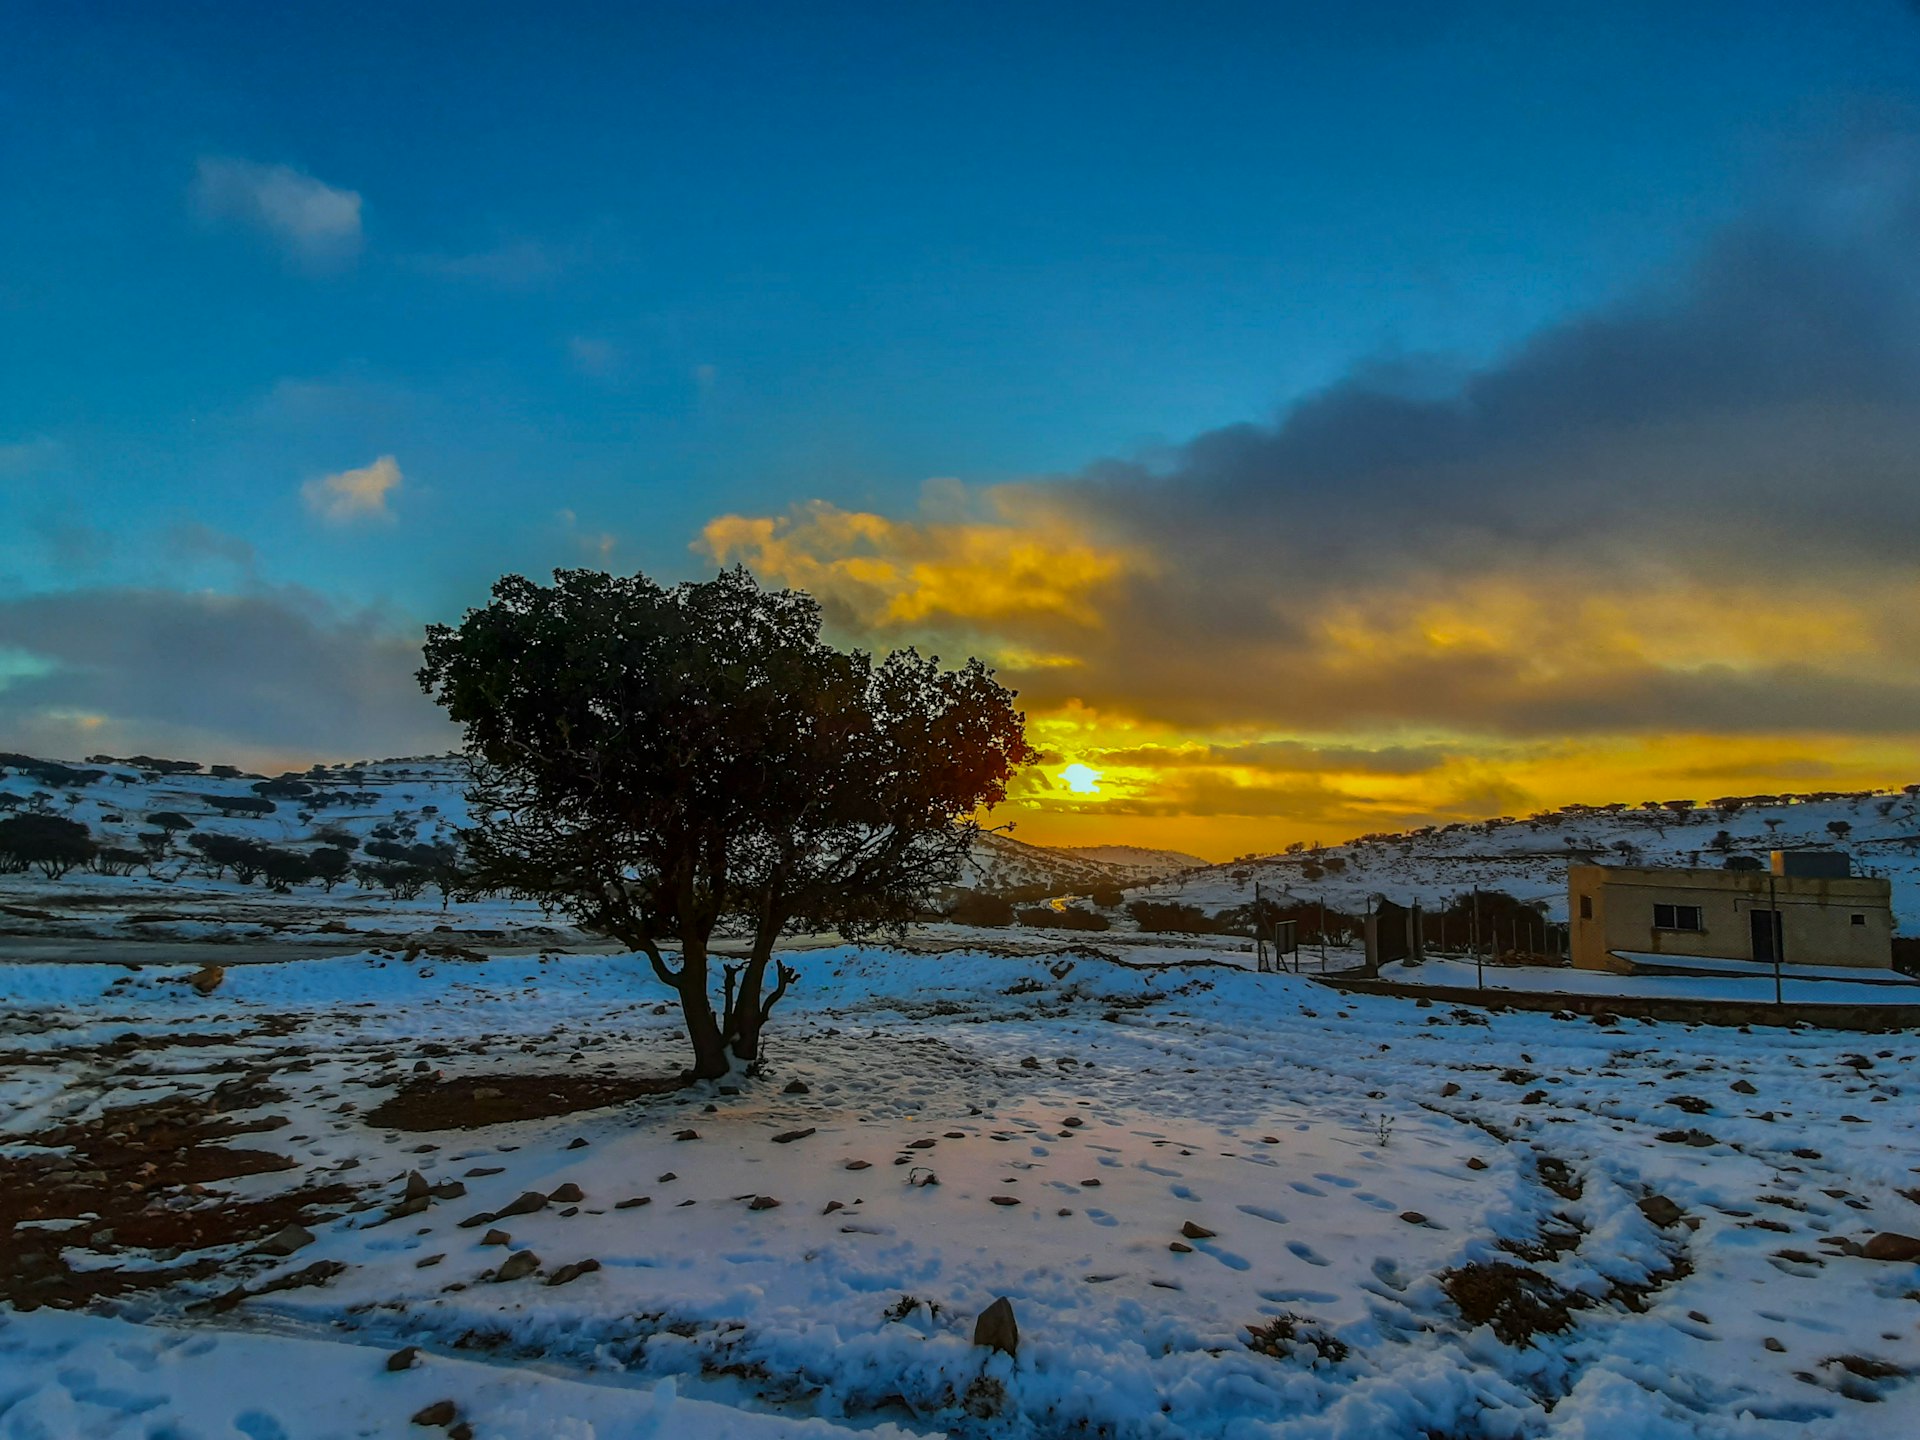 A beautiful sunset behind snowy hills in Jordan